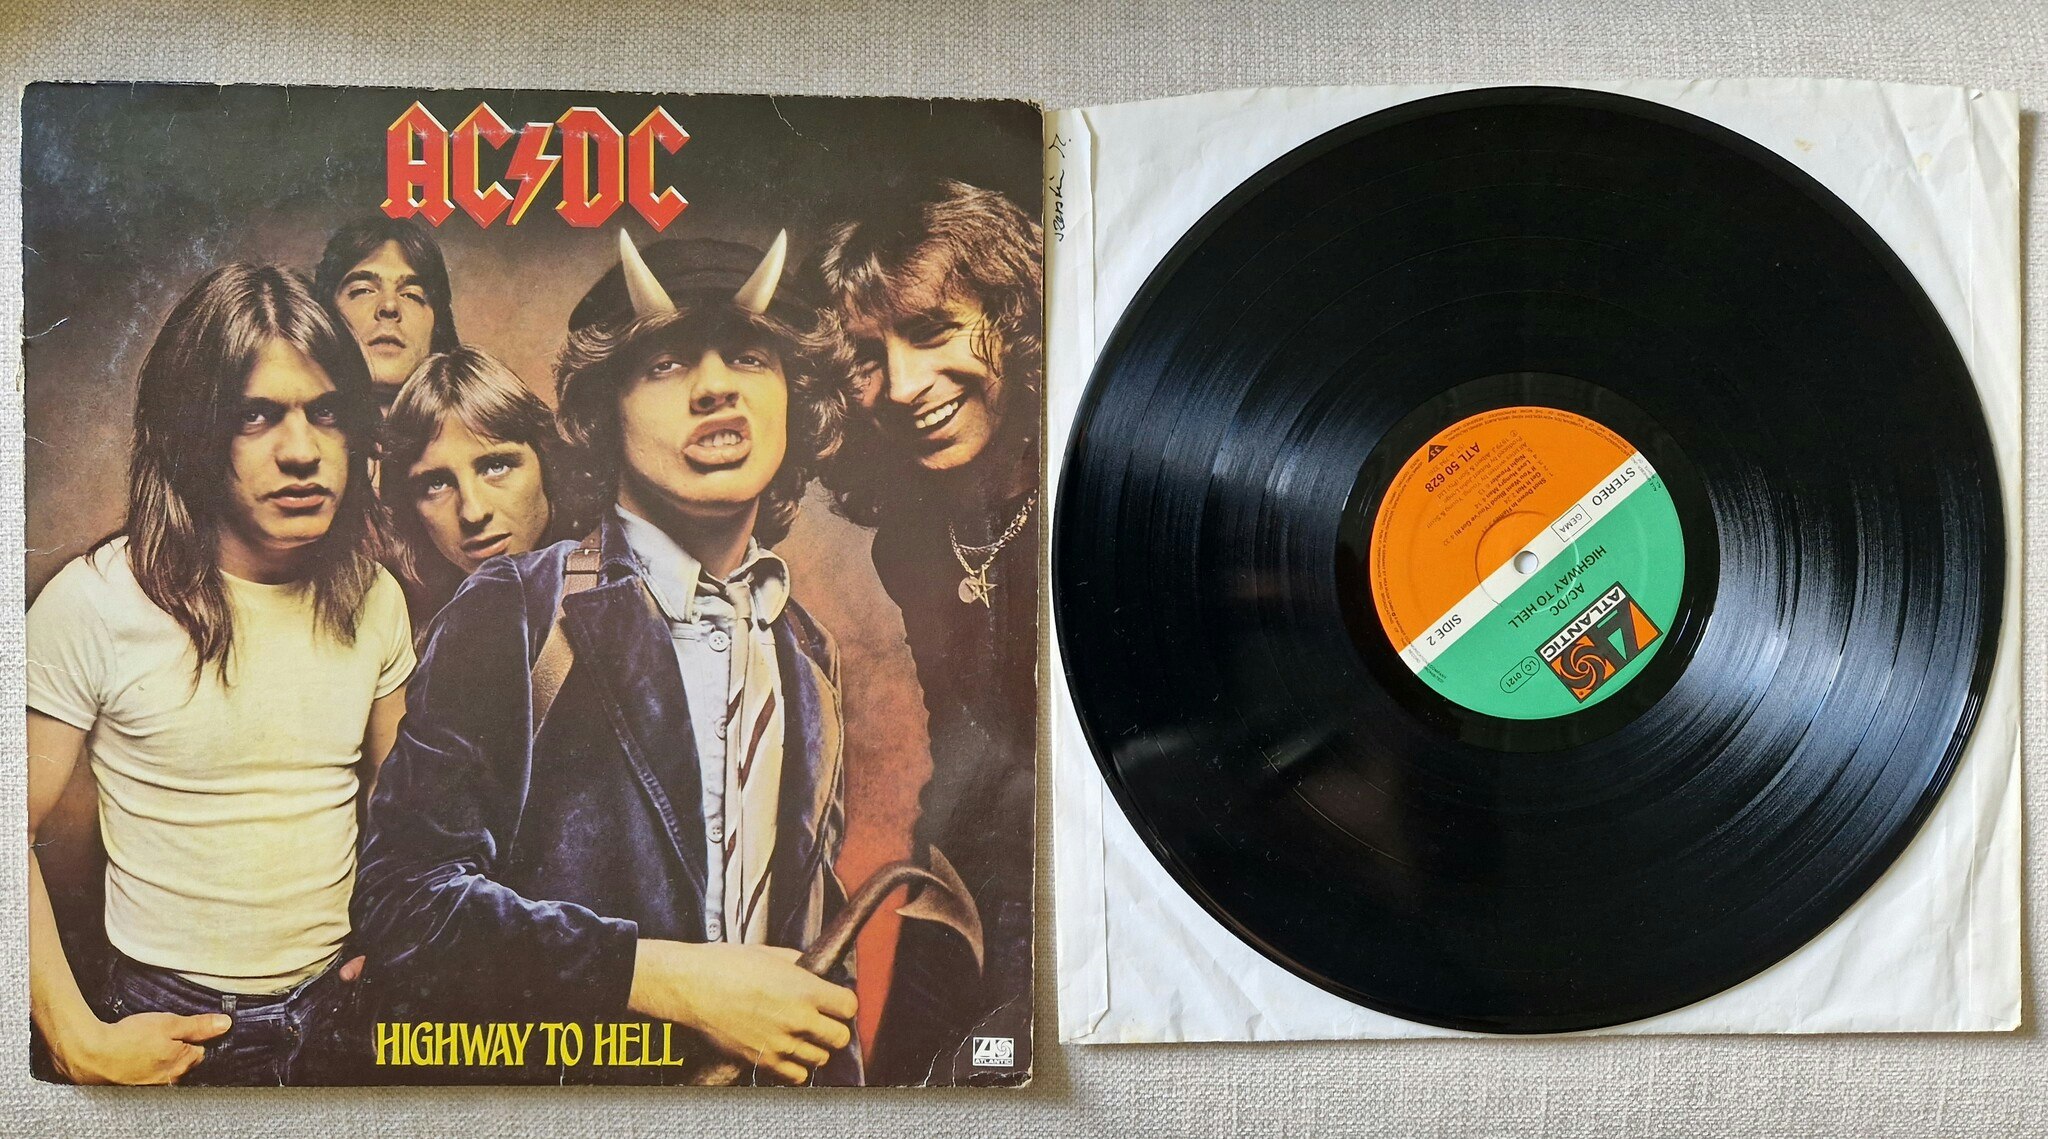 AC/DC, Highway to hell. Vinyl LP